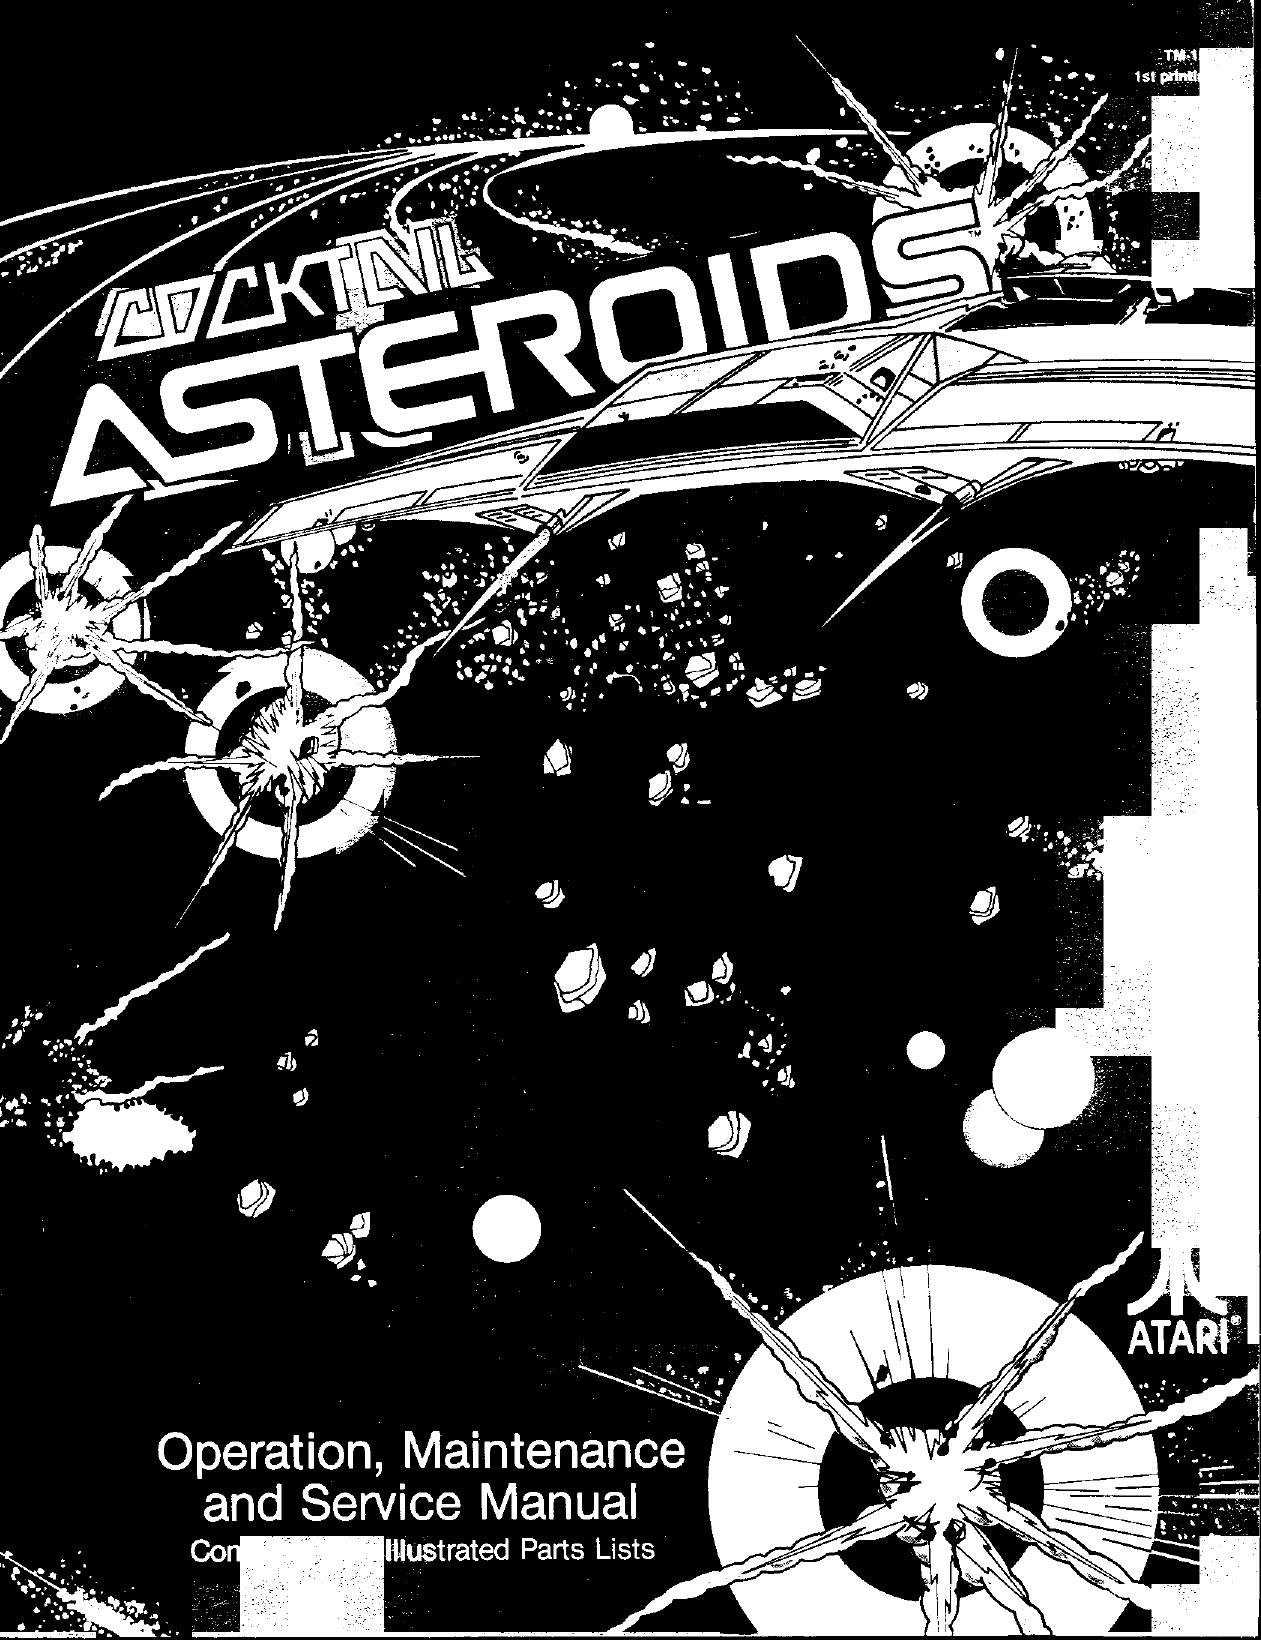 Asteroids (Cocktail TM-150 1st Printing) (Op-Maint-Serv-Parts) (U)